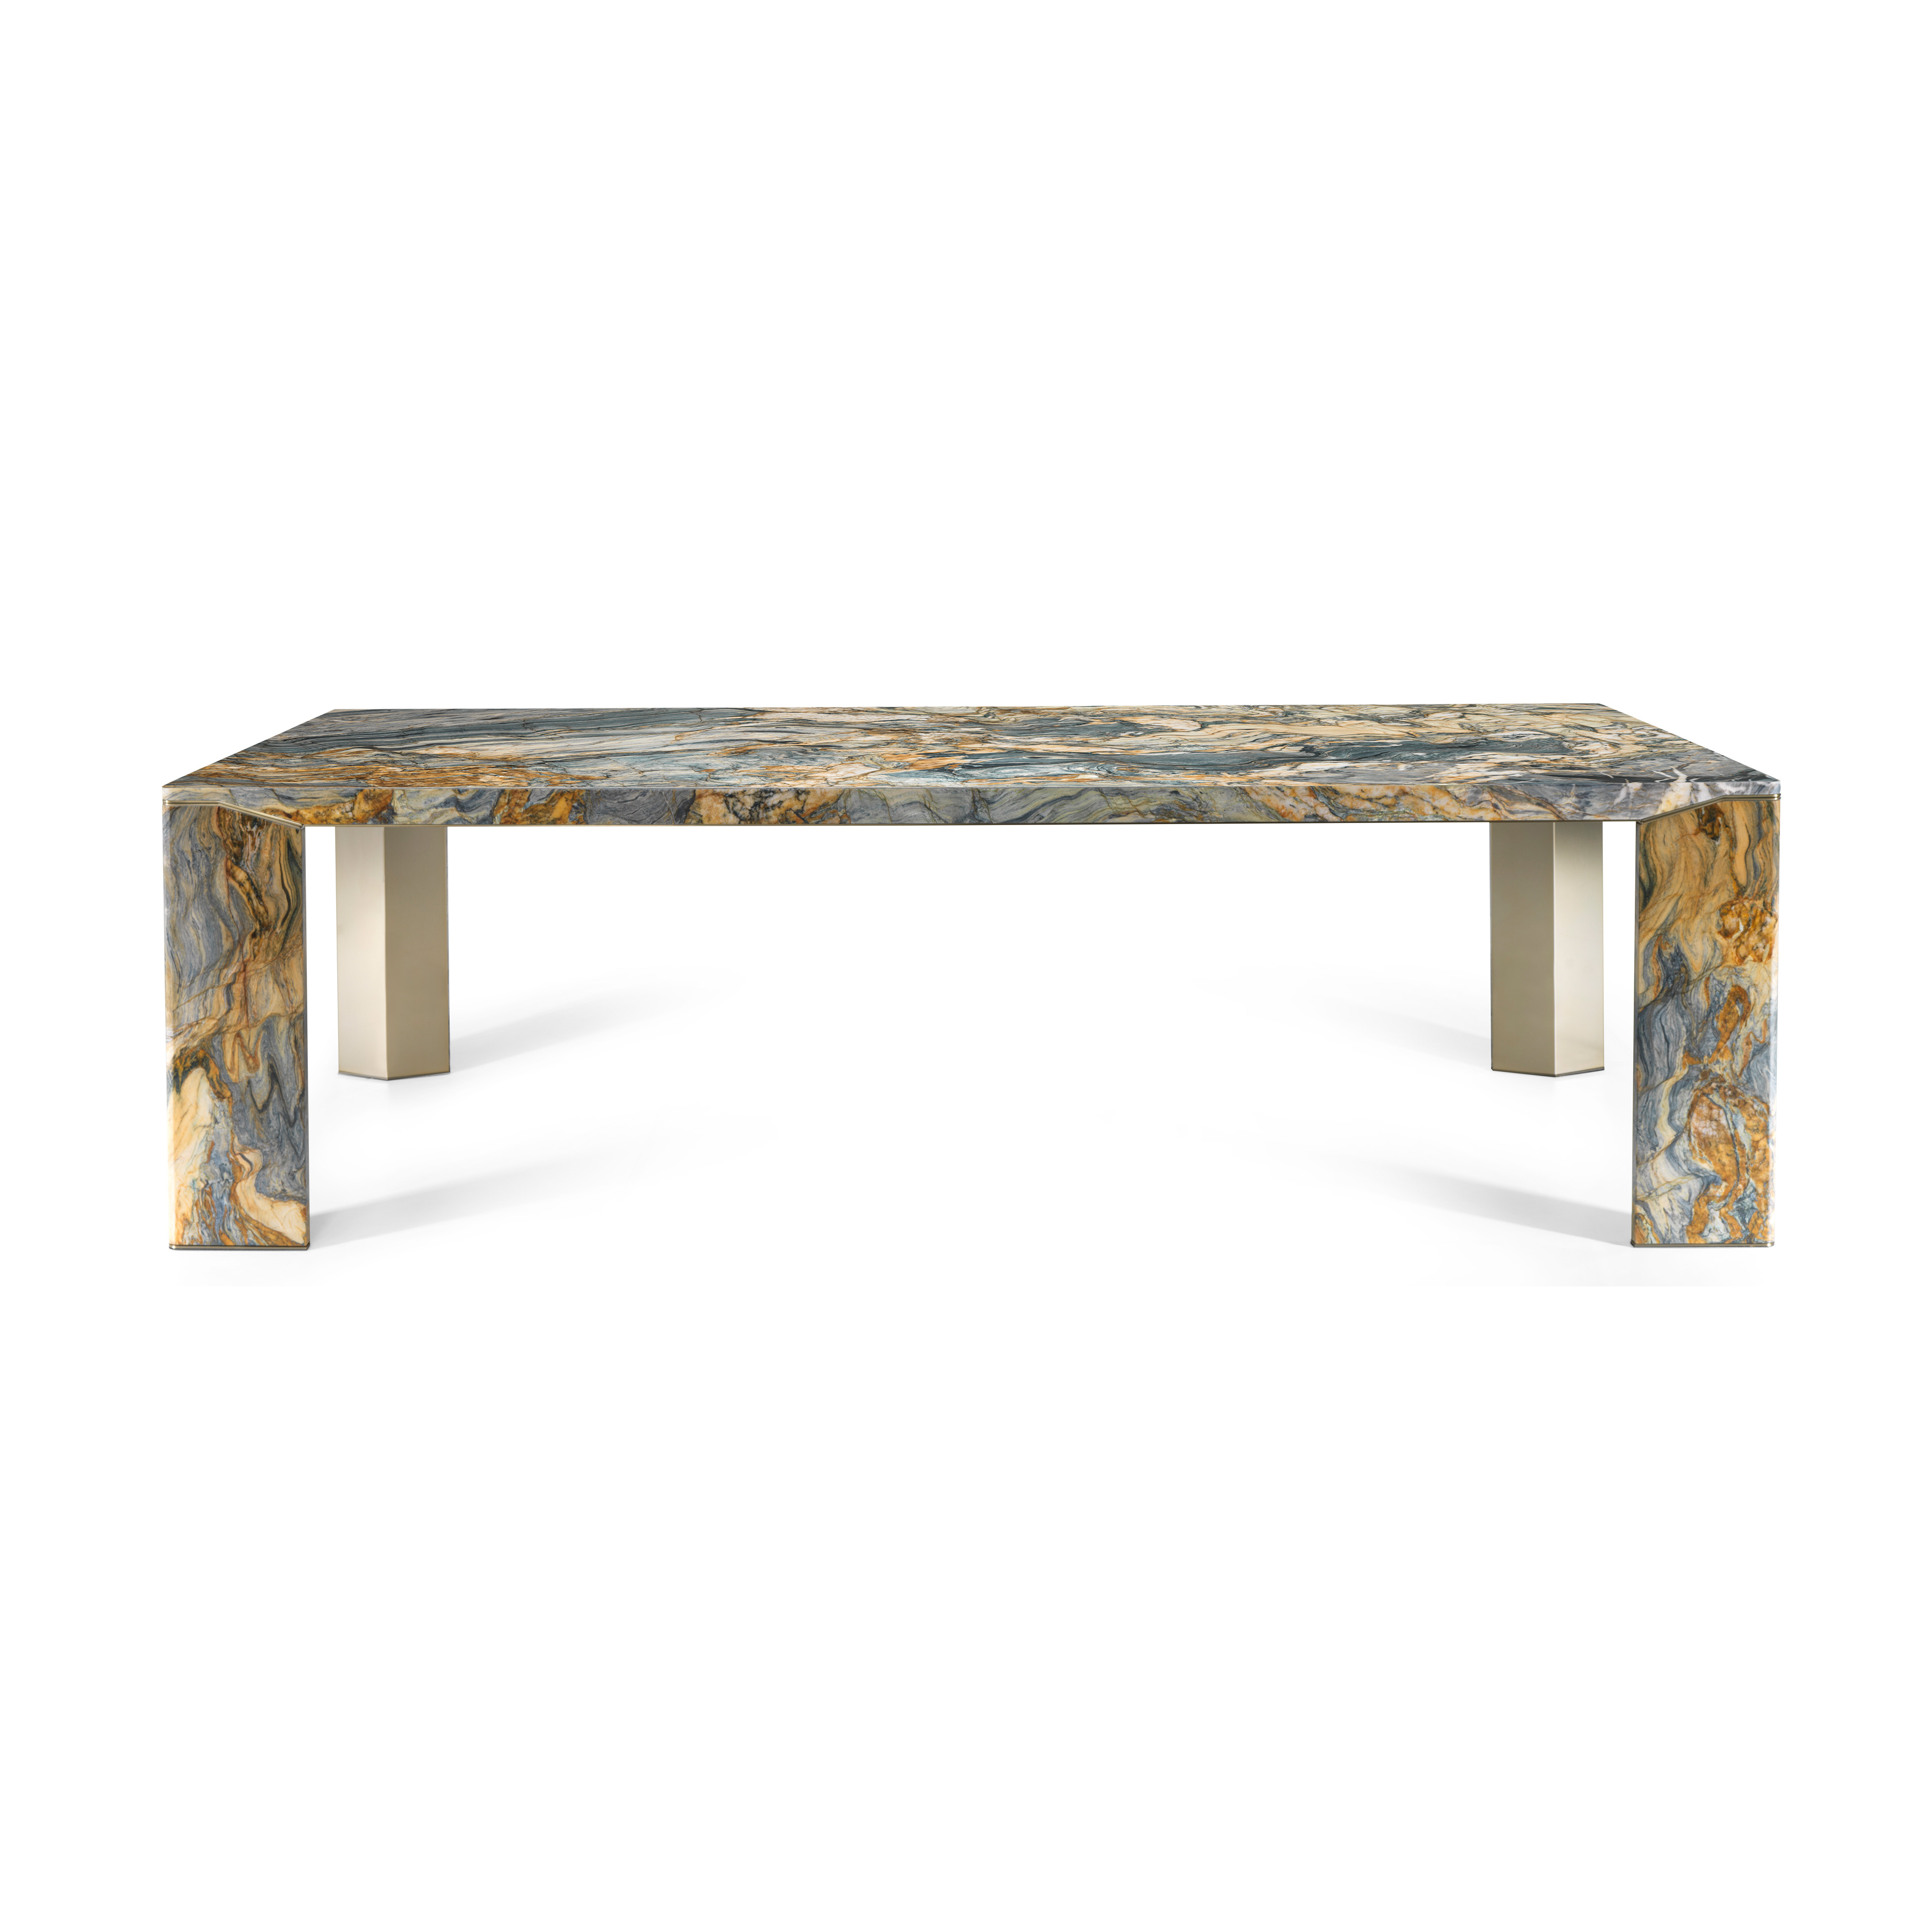 stone-dining-table-gallery-04-jpg